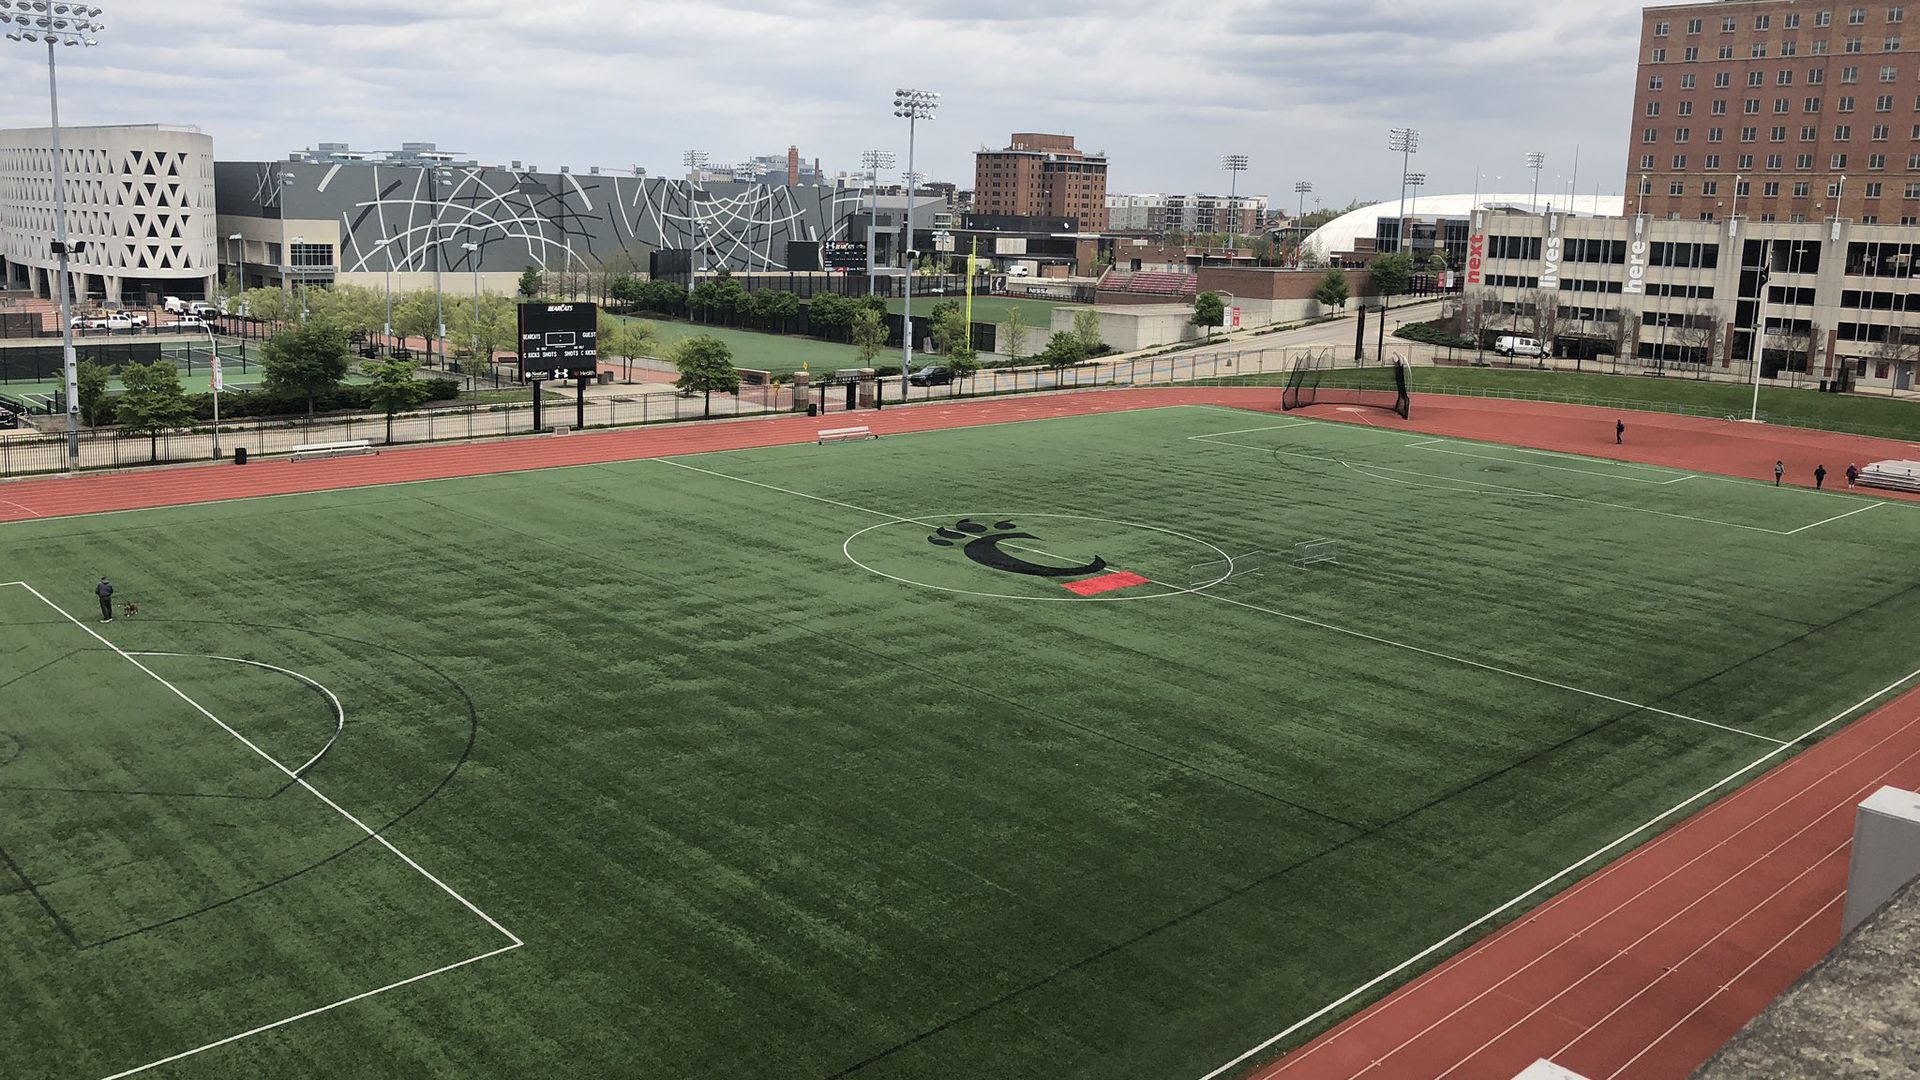 The University of Cincinnati's soccer field.